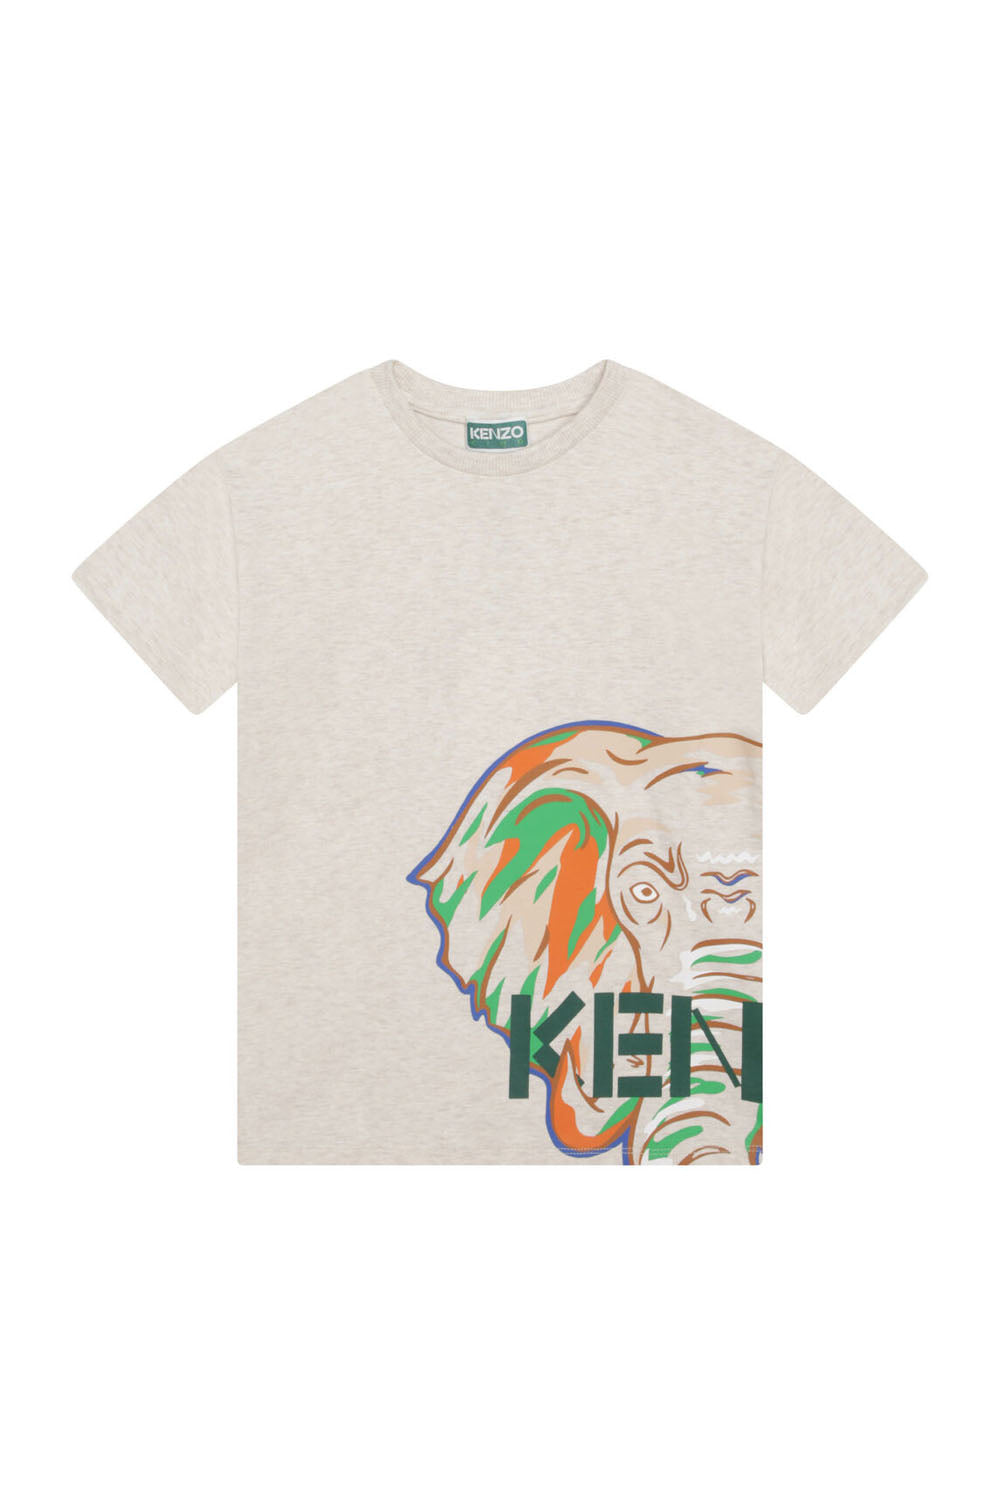 Elephant Print Marl Skate Jersey T-Shirt for Boys Elephant Print Marl Skate Jersey T-Shirt for Boys Maison7